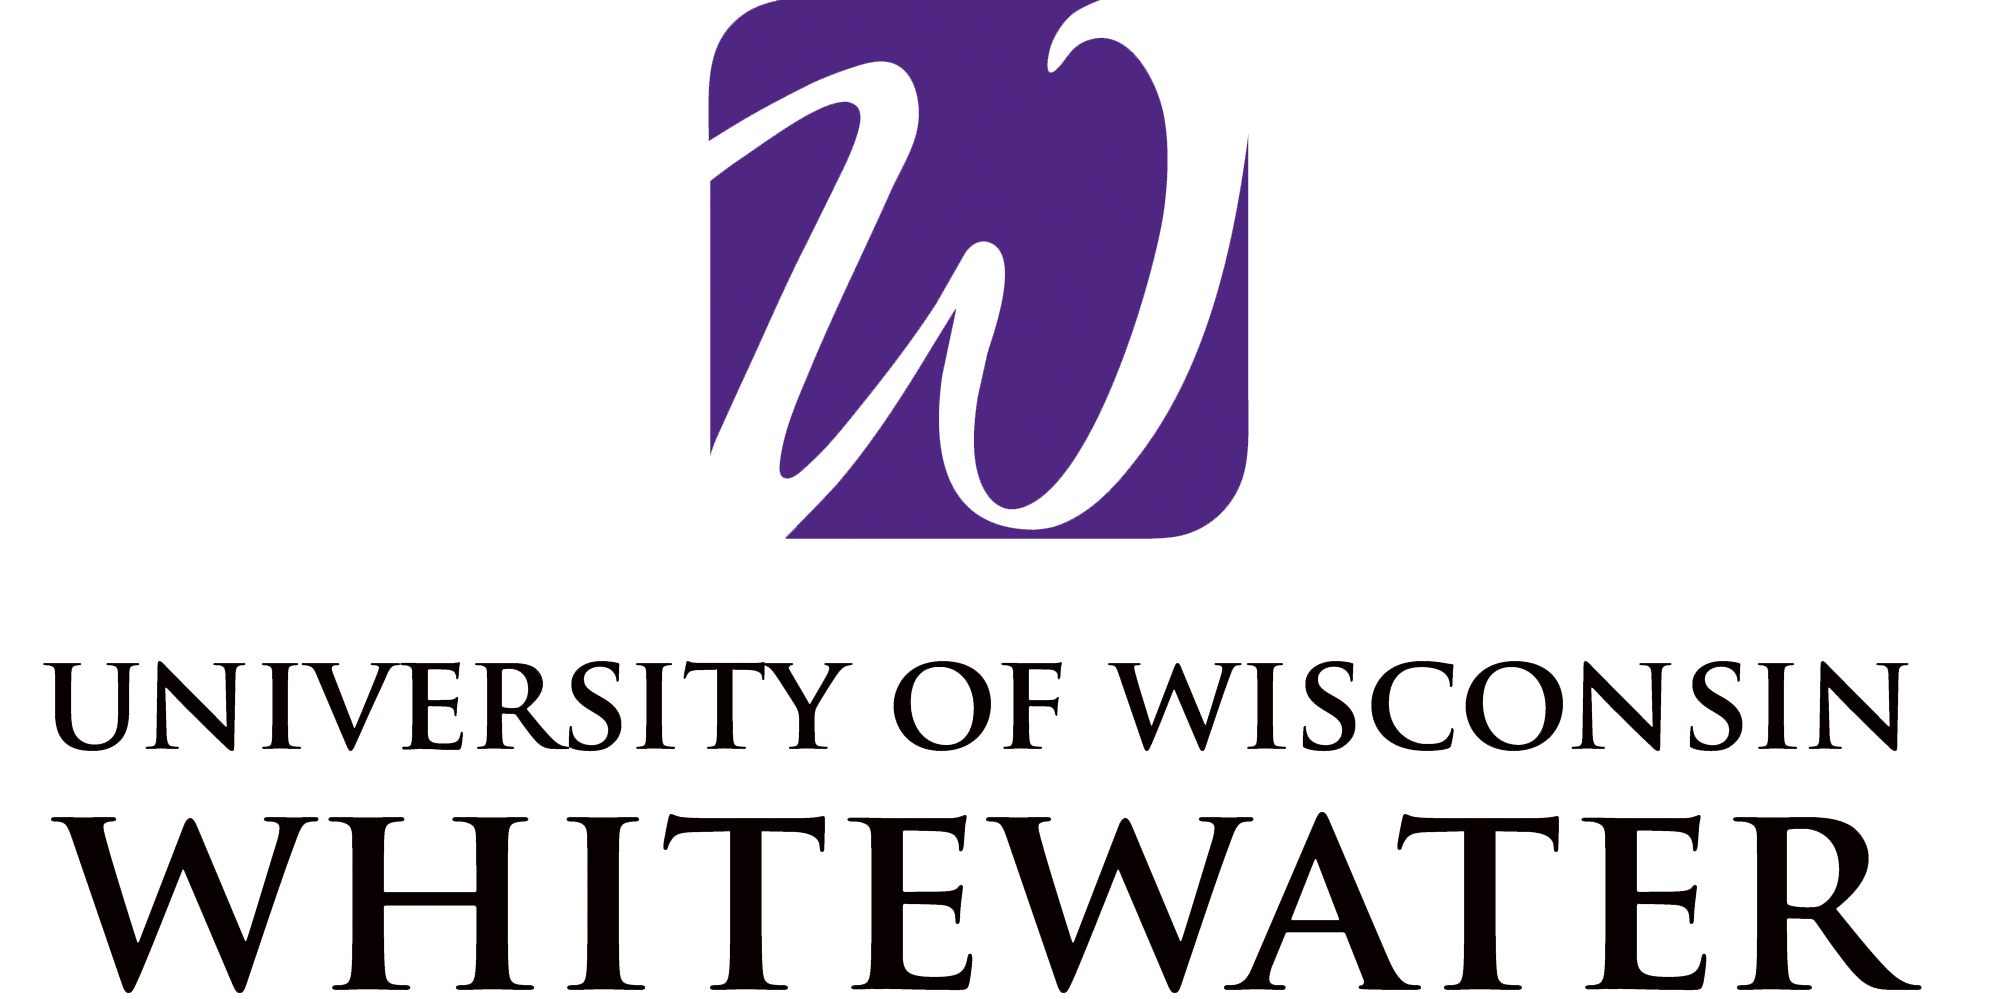 University of Wisconsin - Whitewater